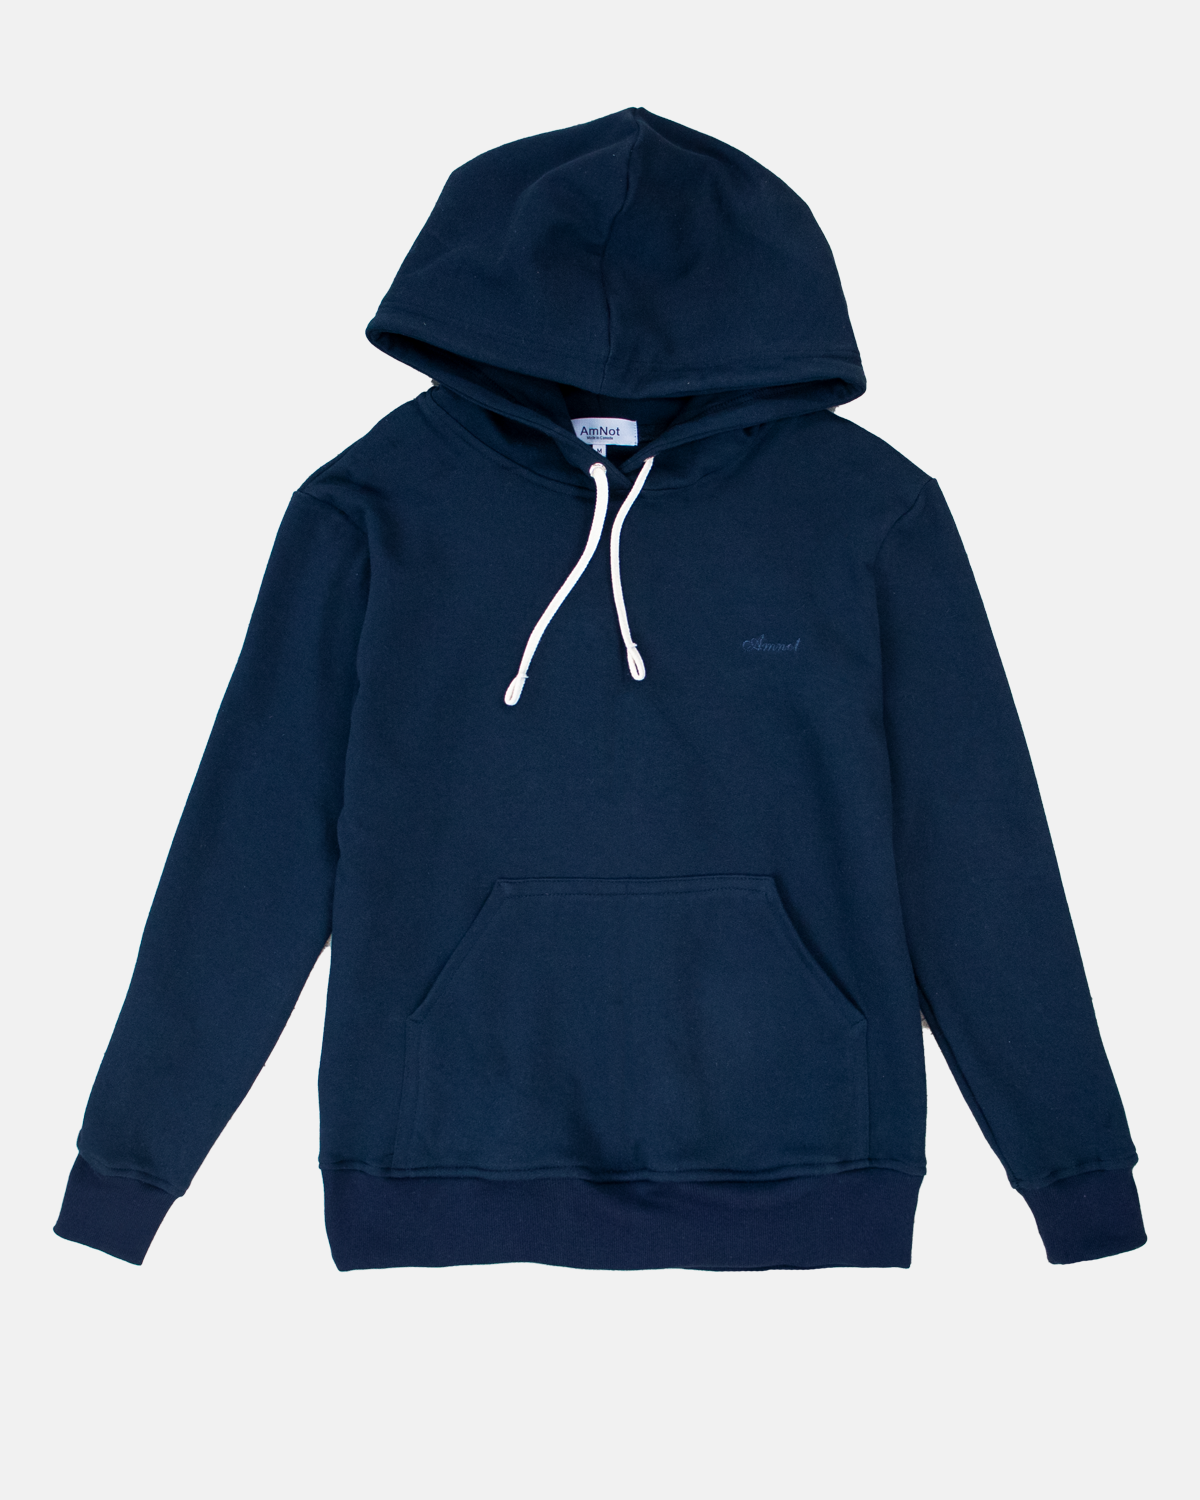 AmNot organic cotton hoodie